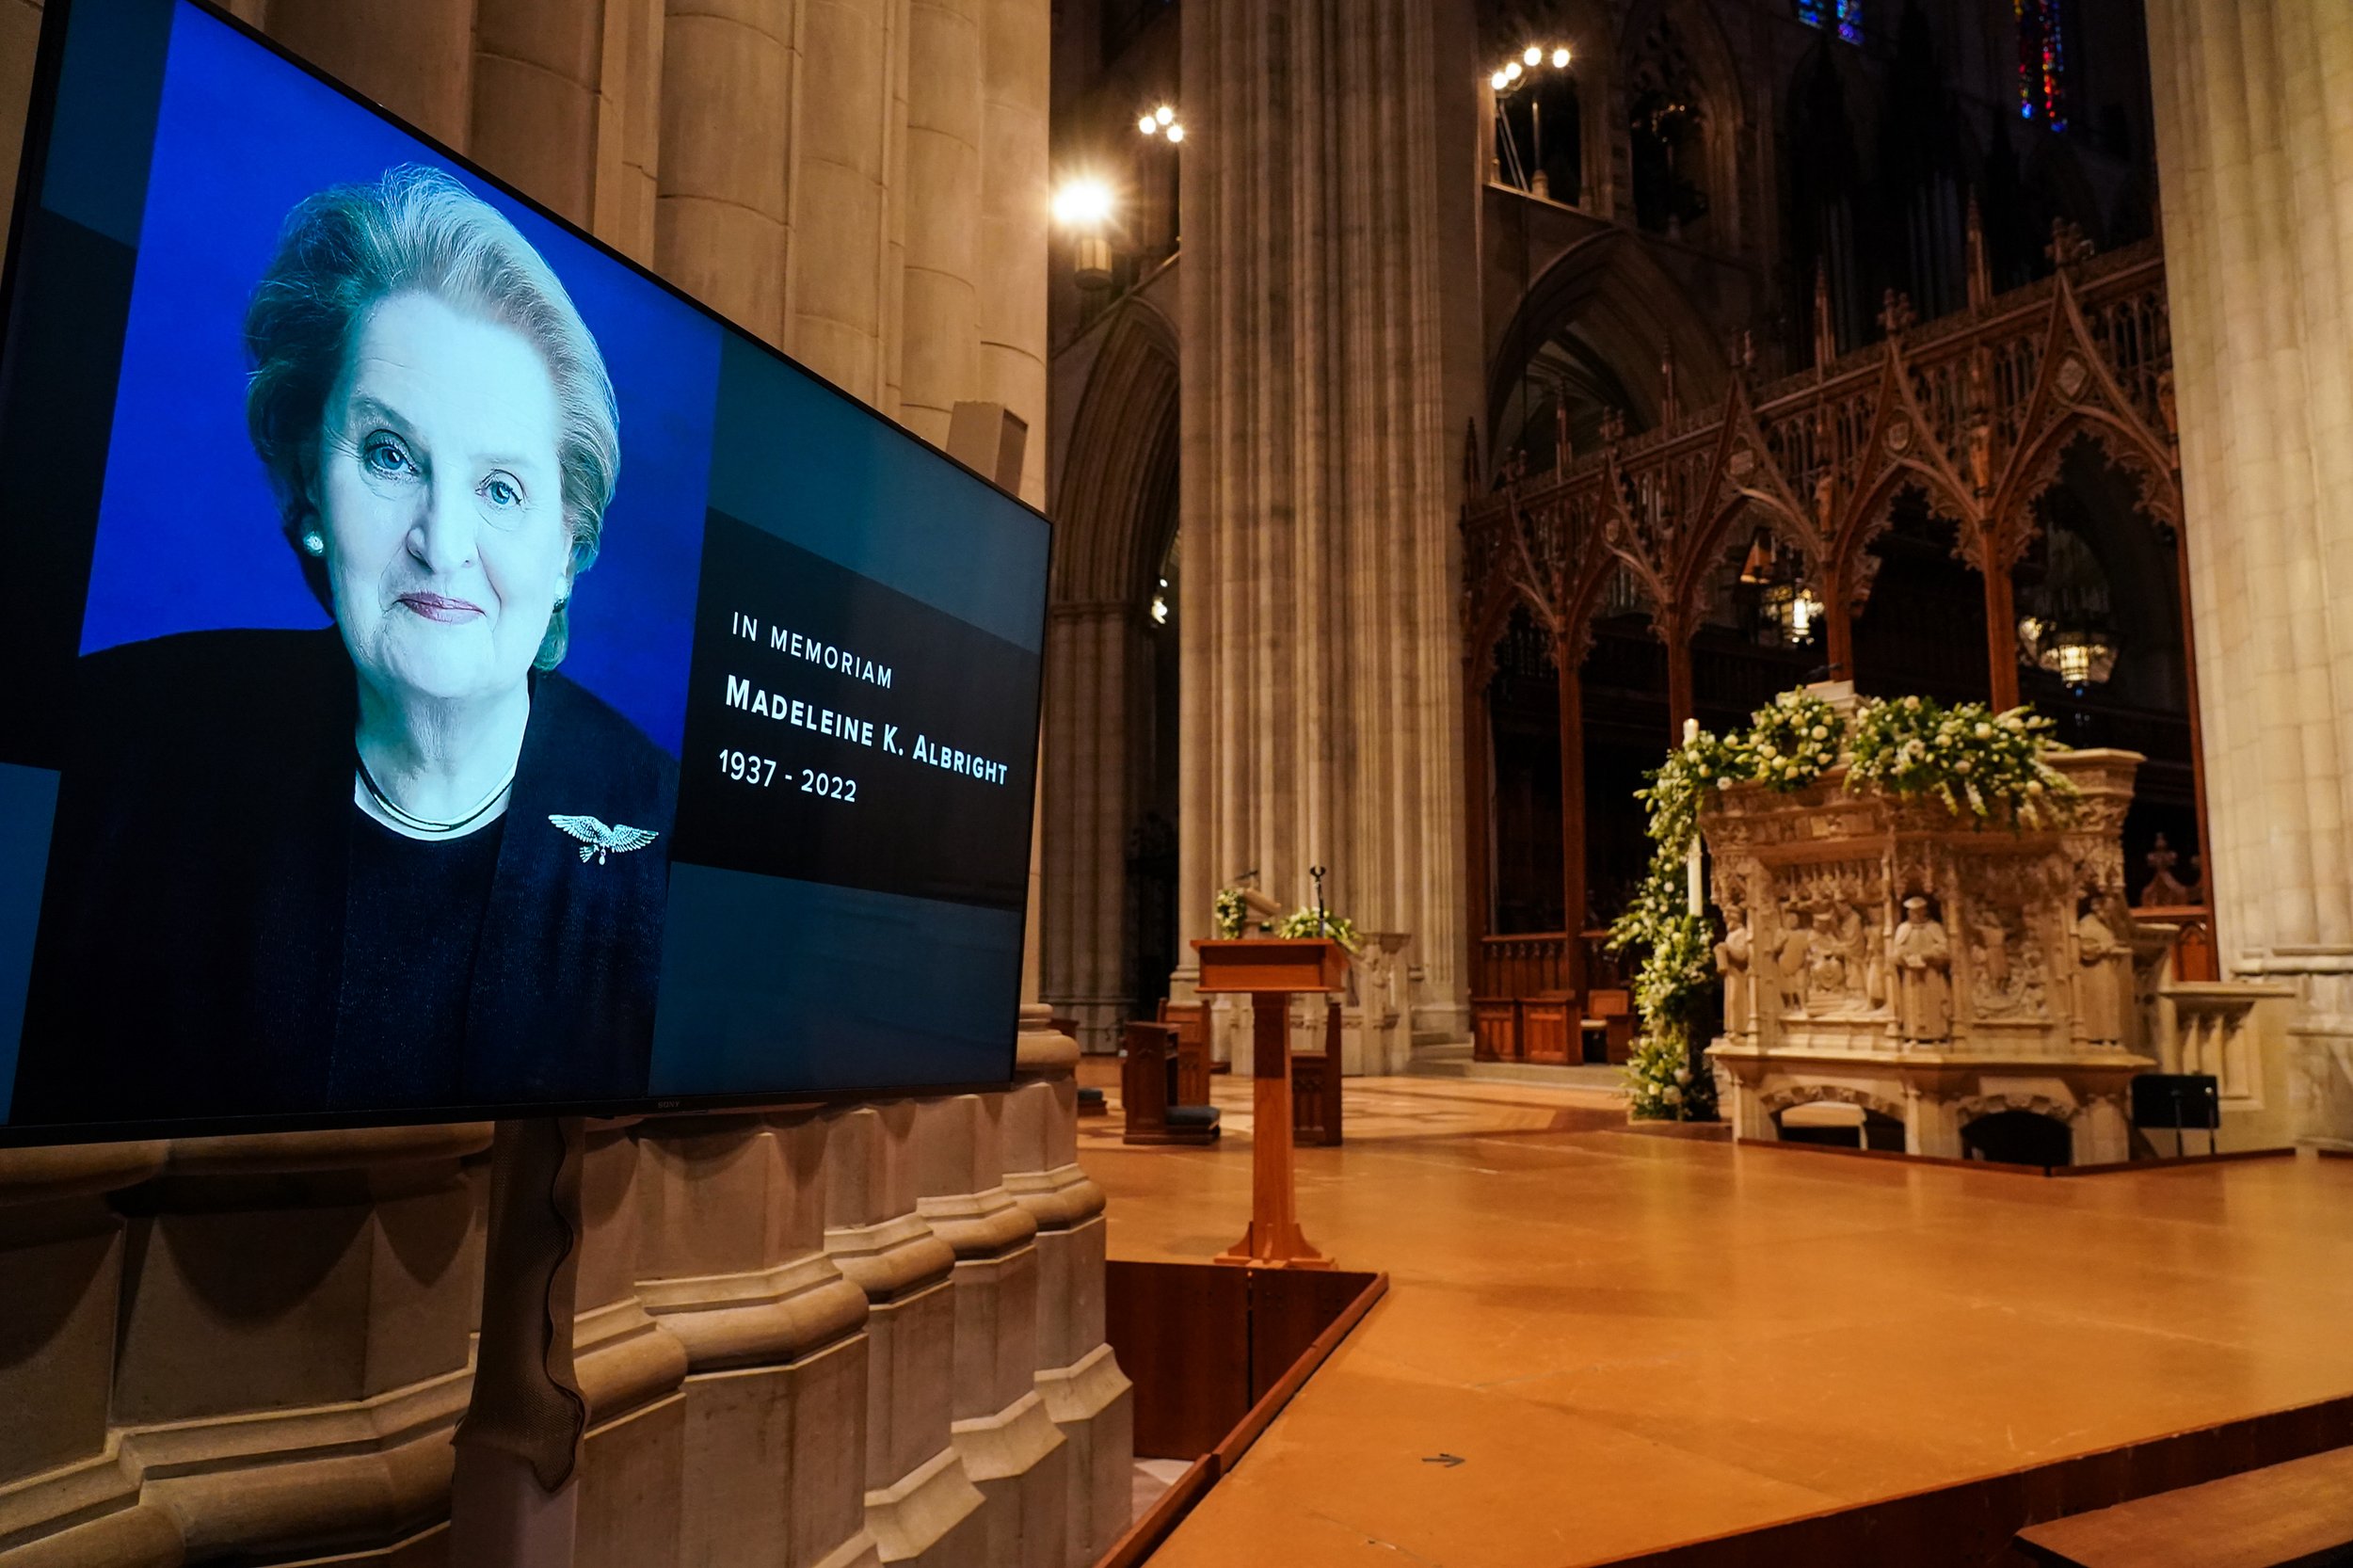 Madeleine Albright Memorial Service